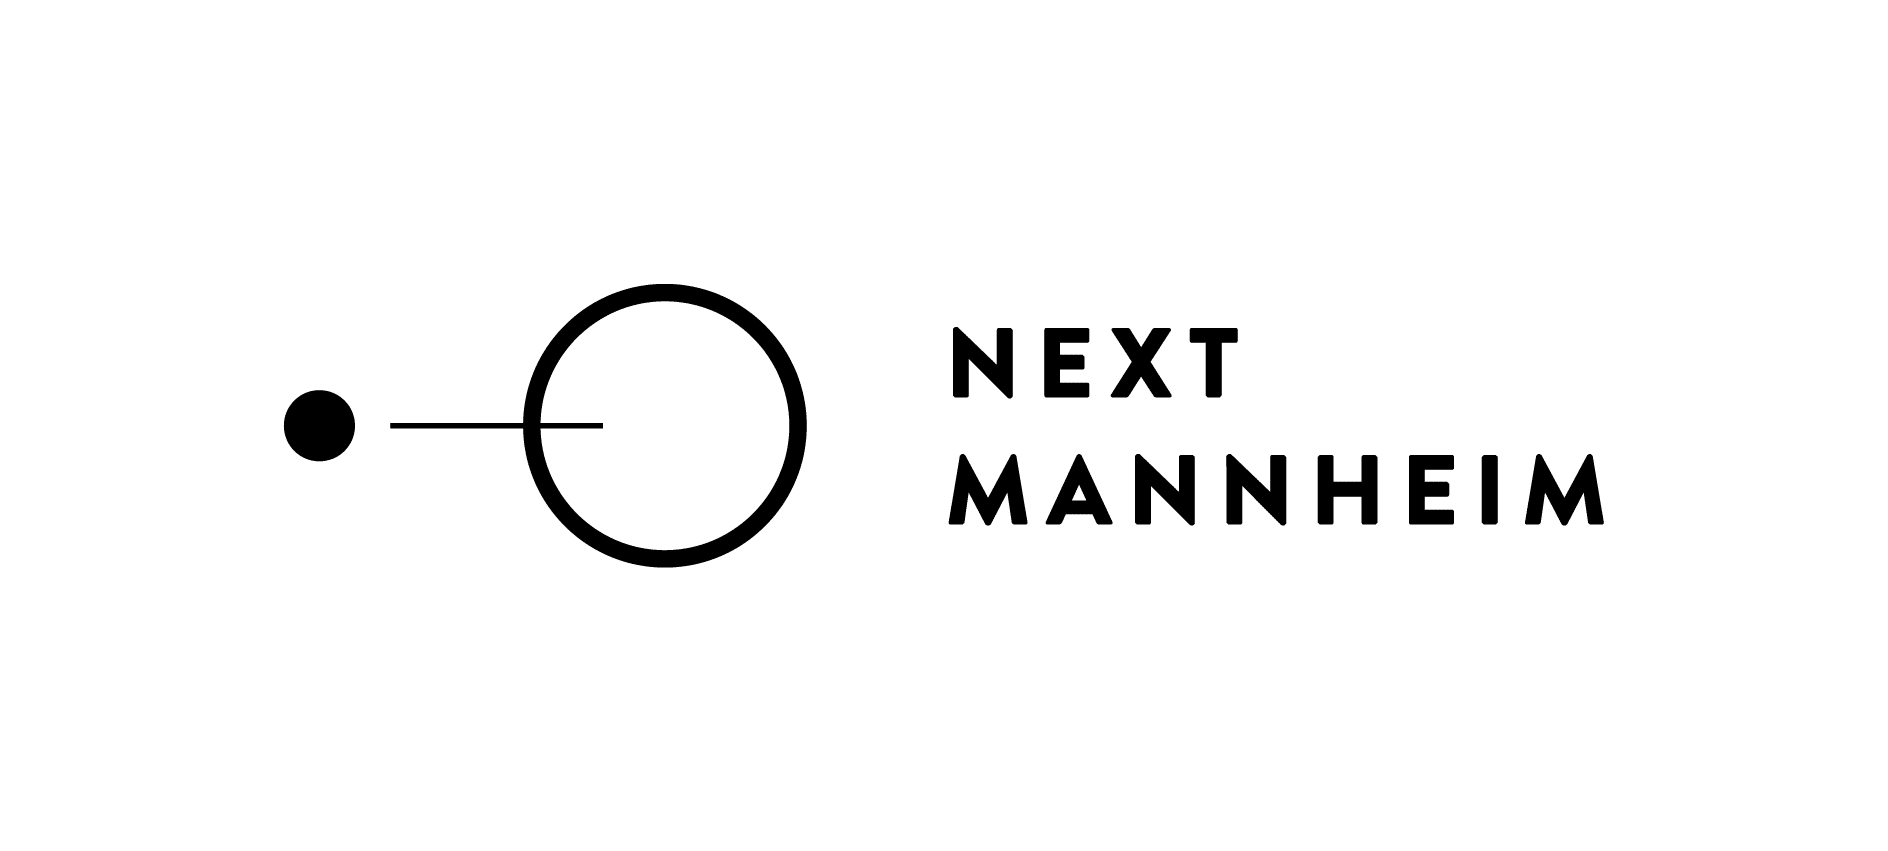 Next Mannheim - Dachmarke - RGB - 300ppi (1)